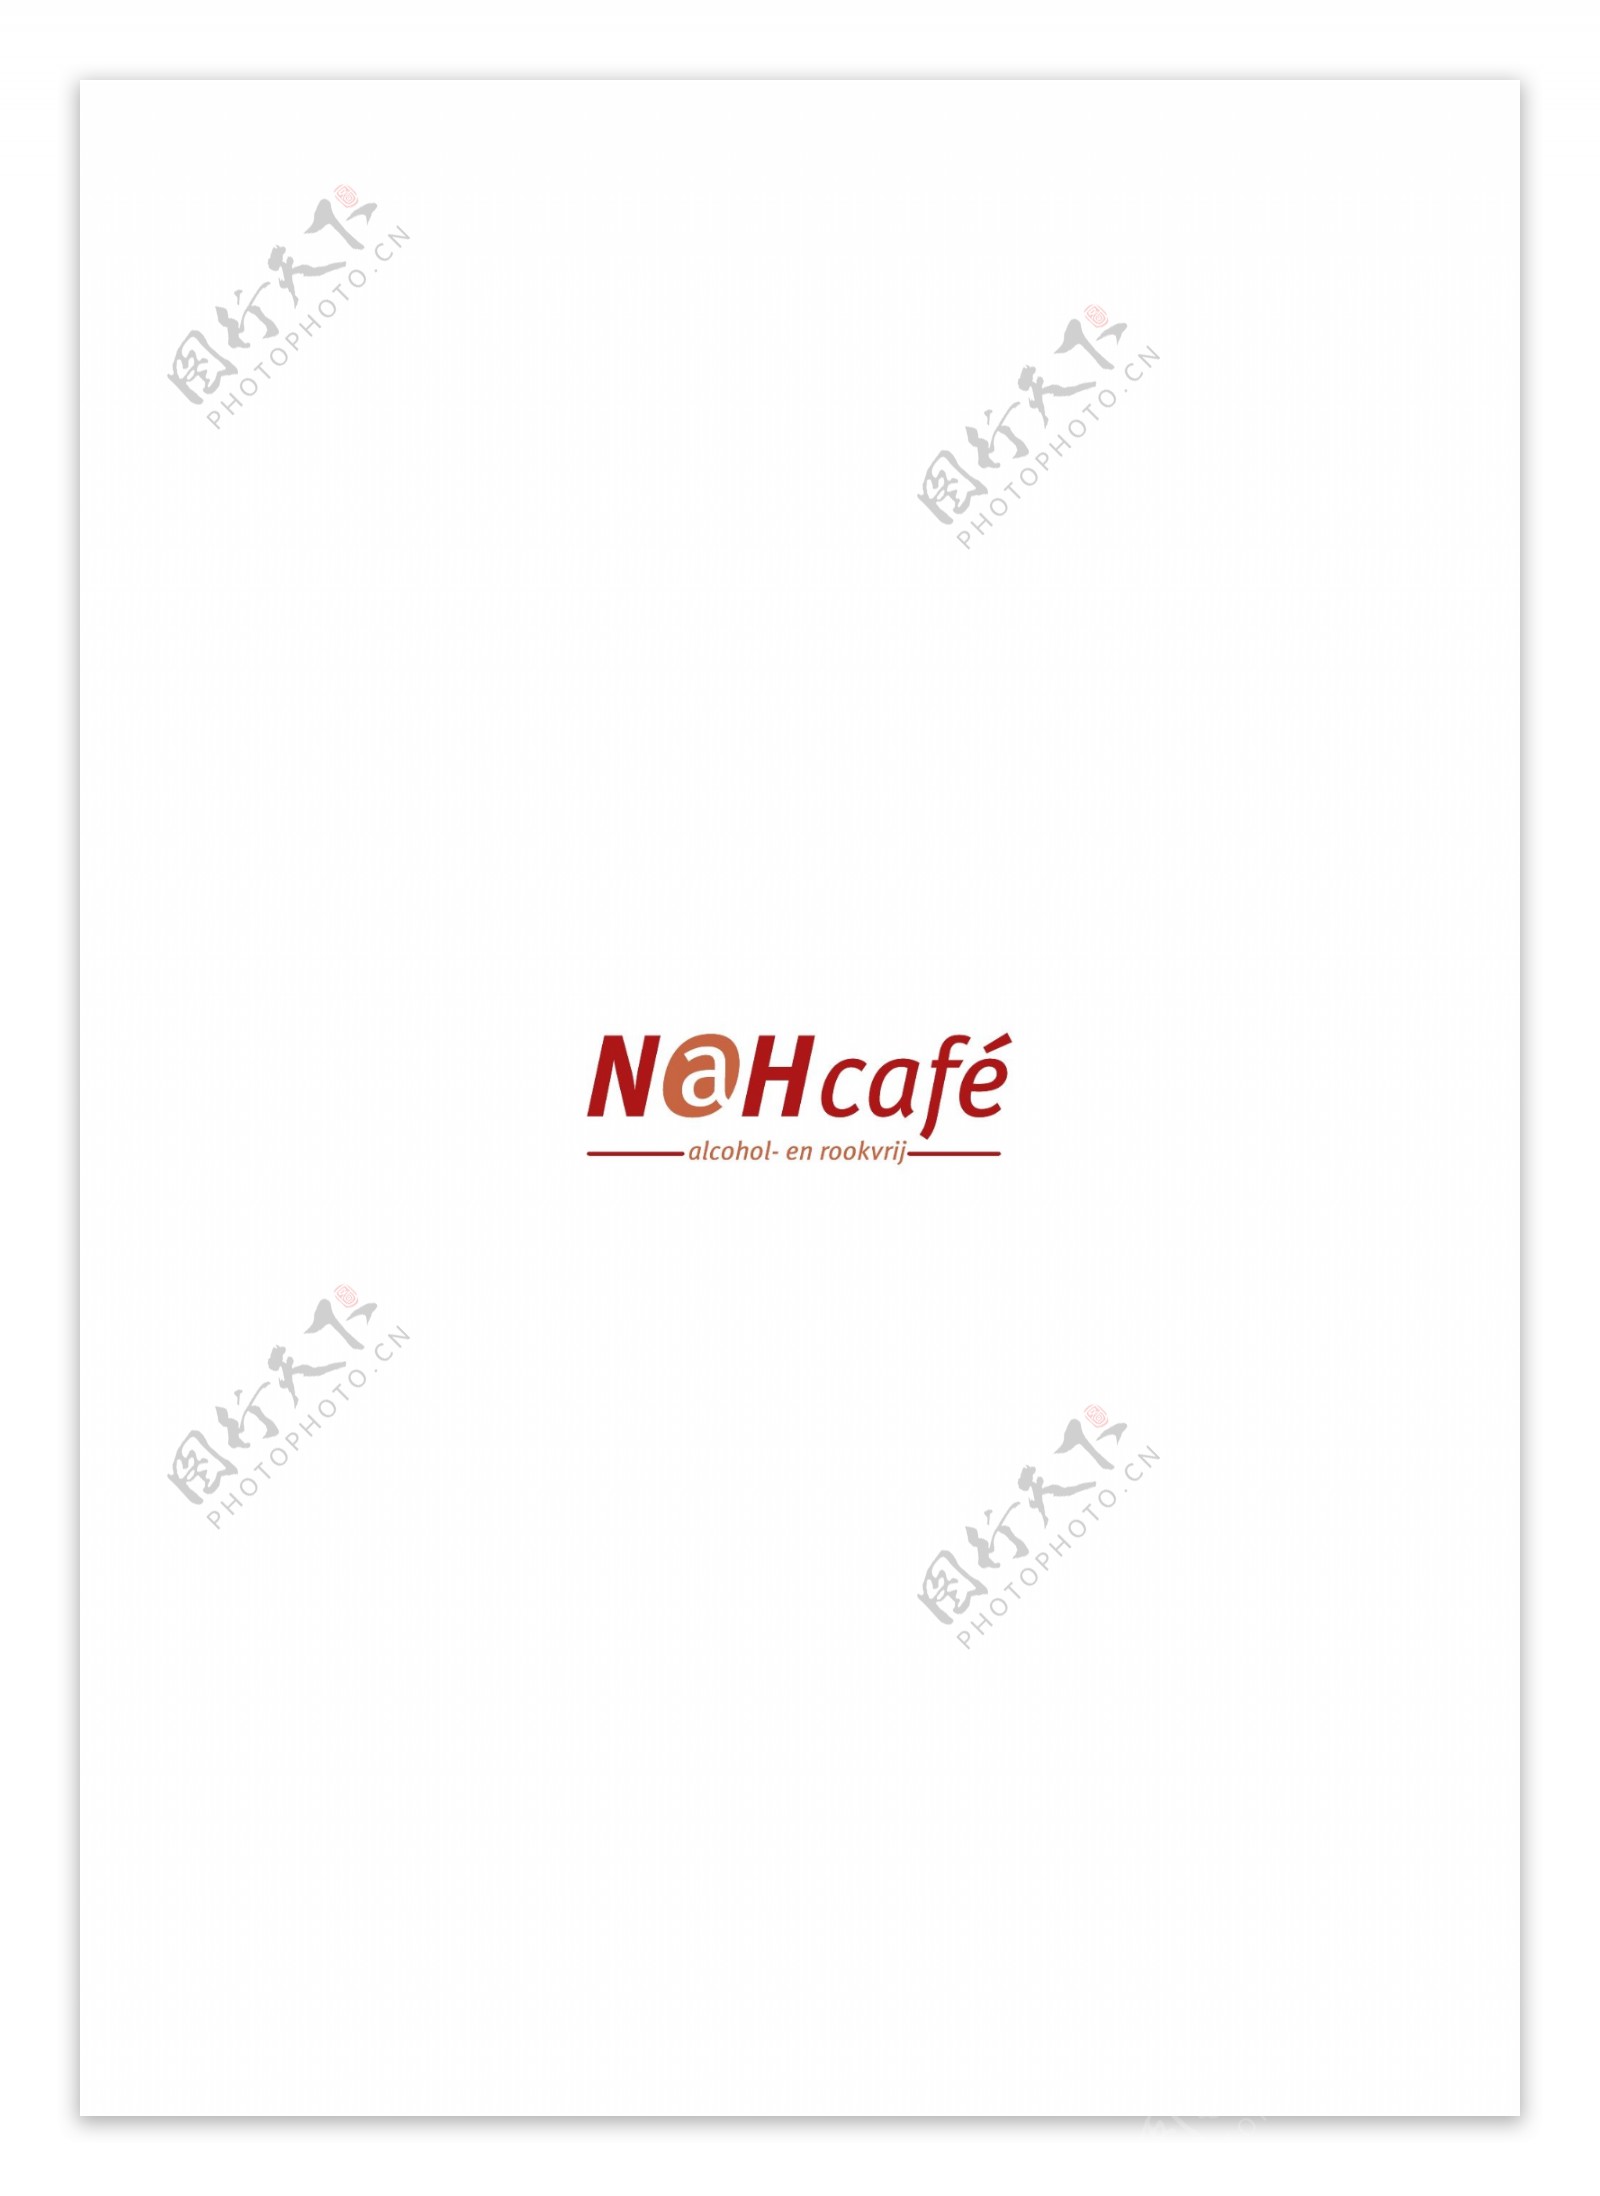 NaHcafelogo设计欣赏NaHcafe卫生机构LOGO下载标志设计欣赏